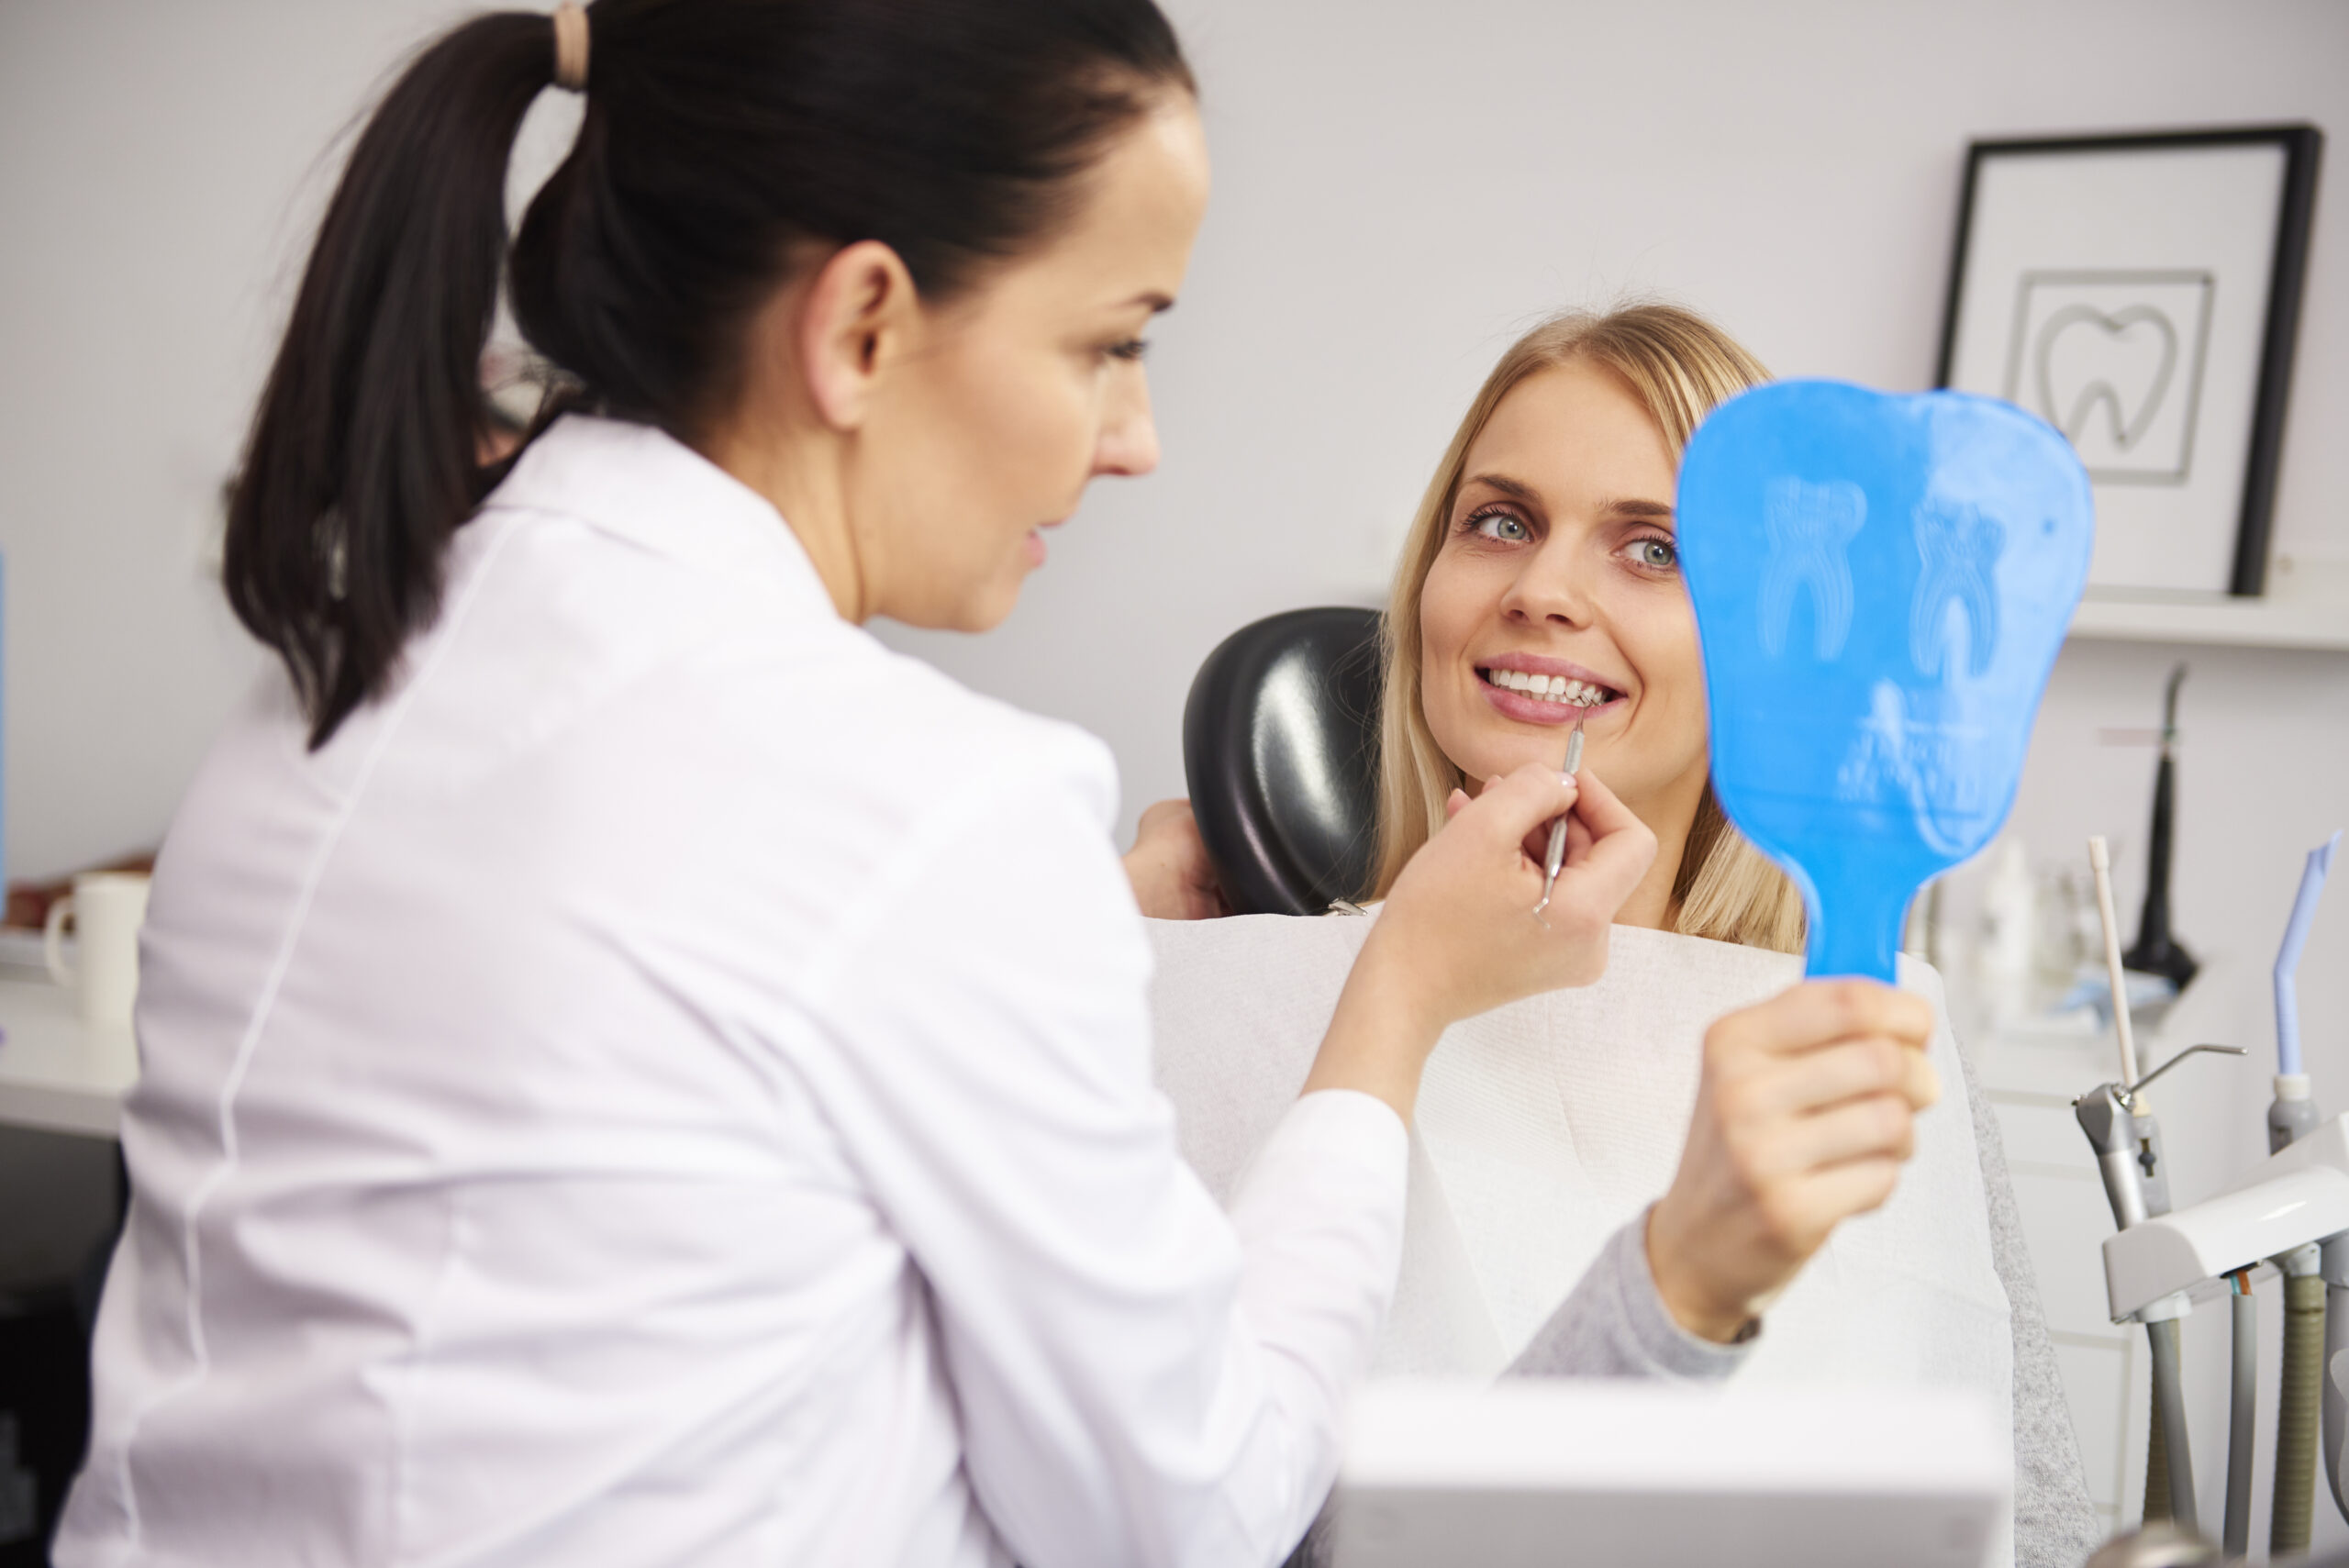 stomatologist checking the woman's teeth during dental checkup